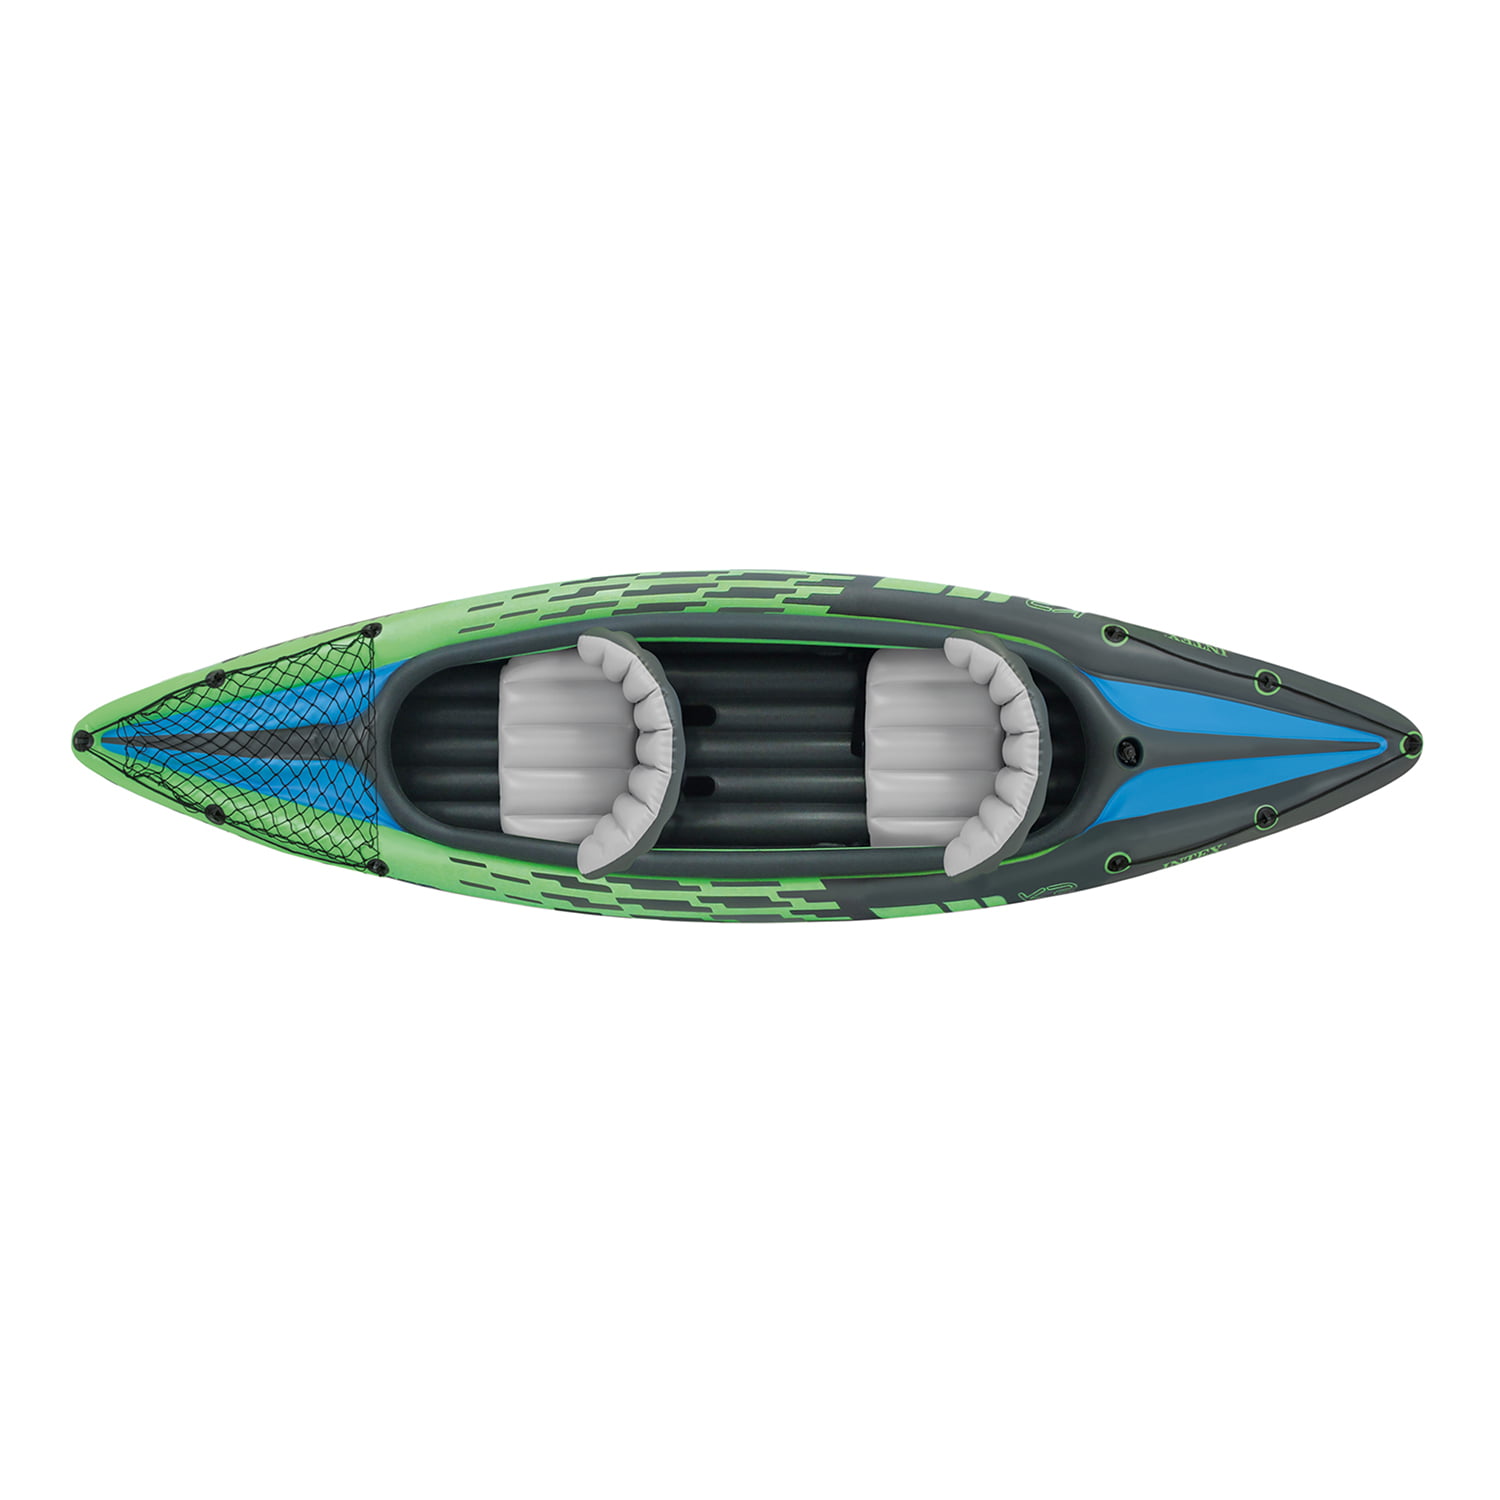 Intex Challenger K2 Kayak, Green/Black/Green, OS